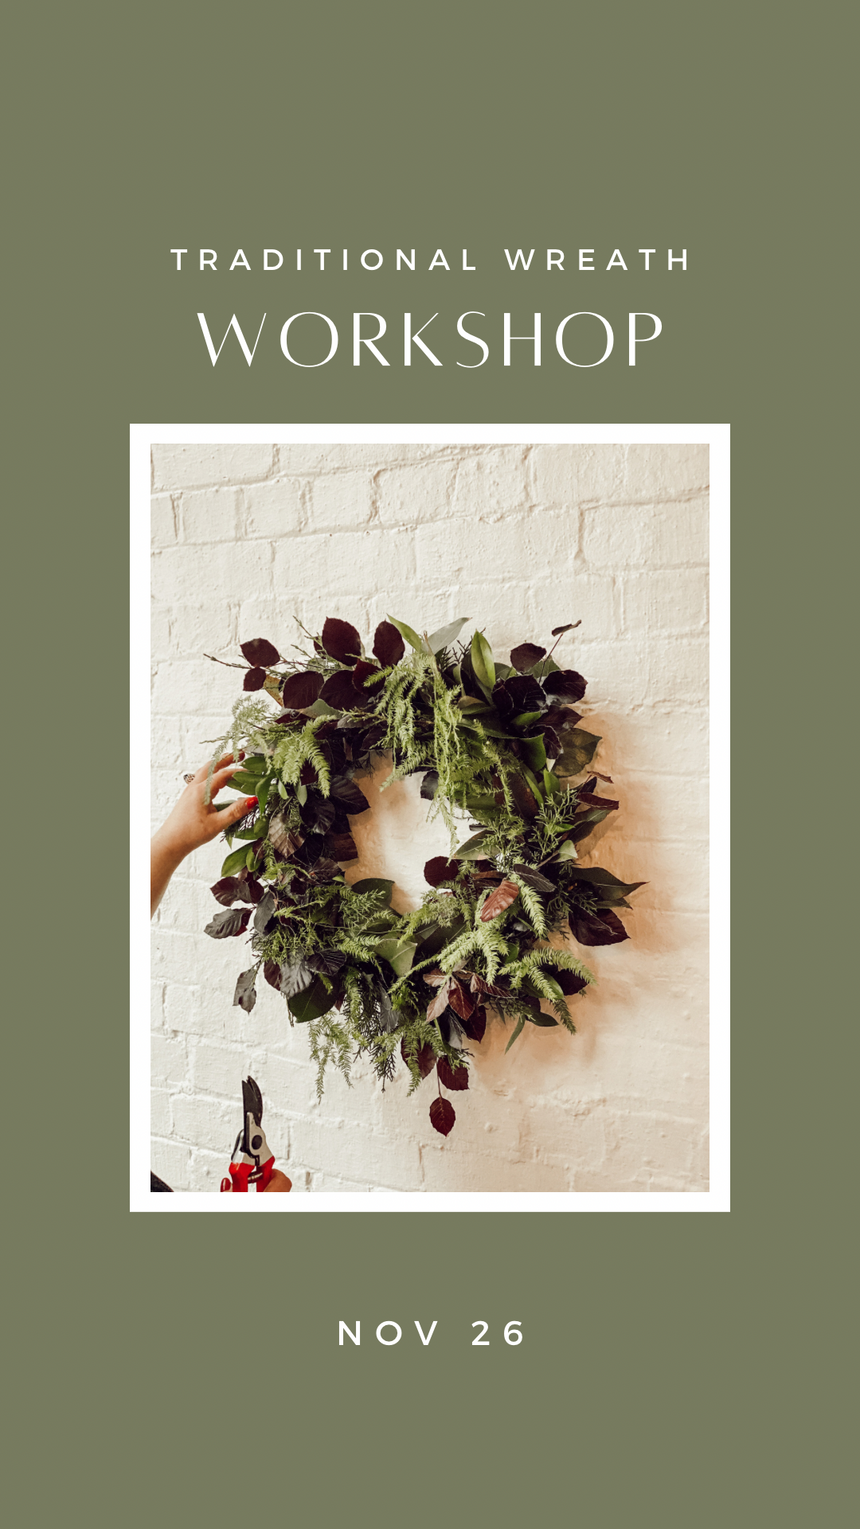 Wreath Workshop November 26th